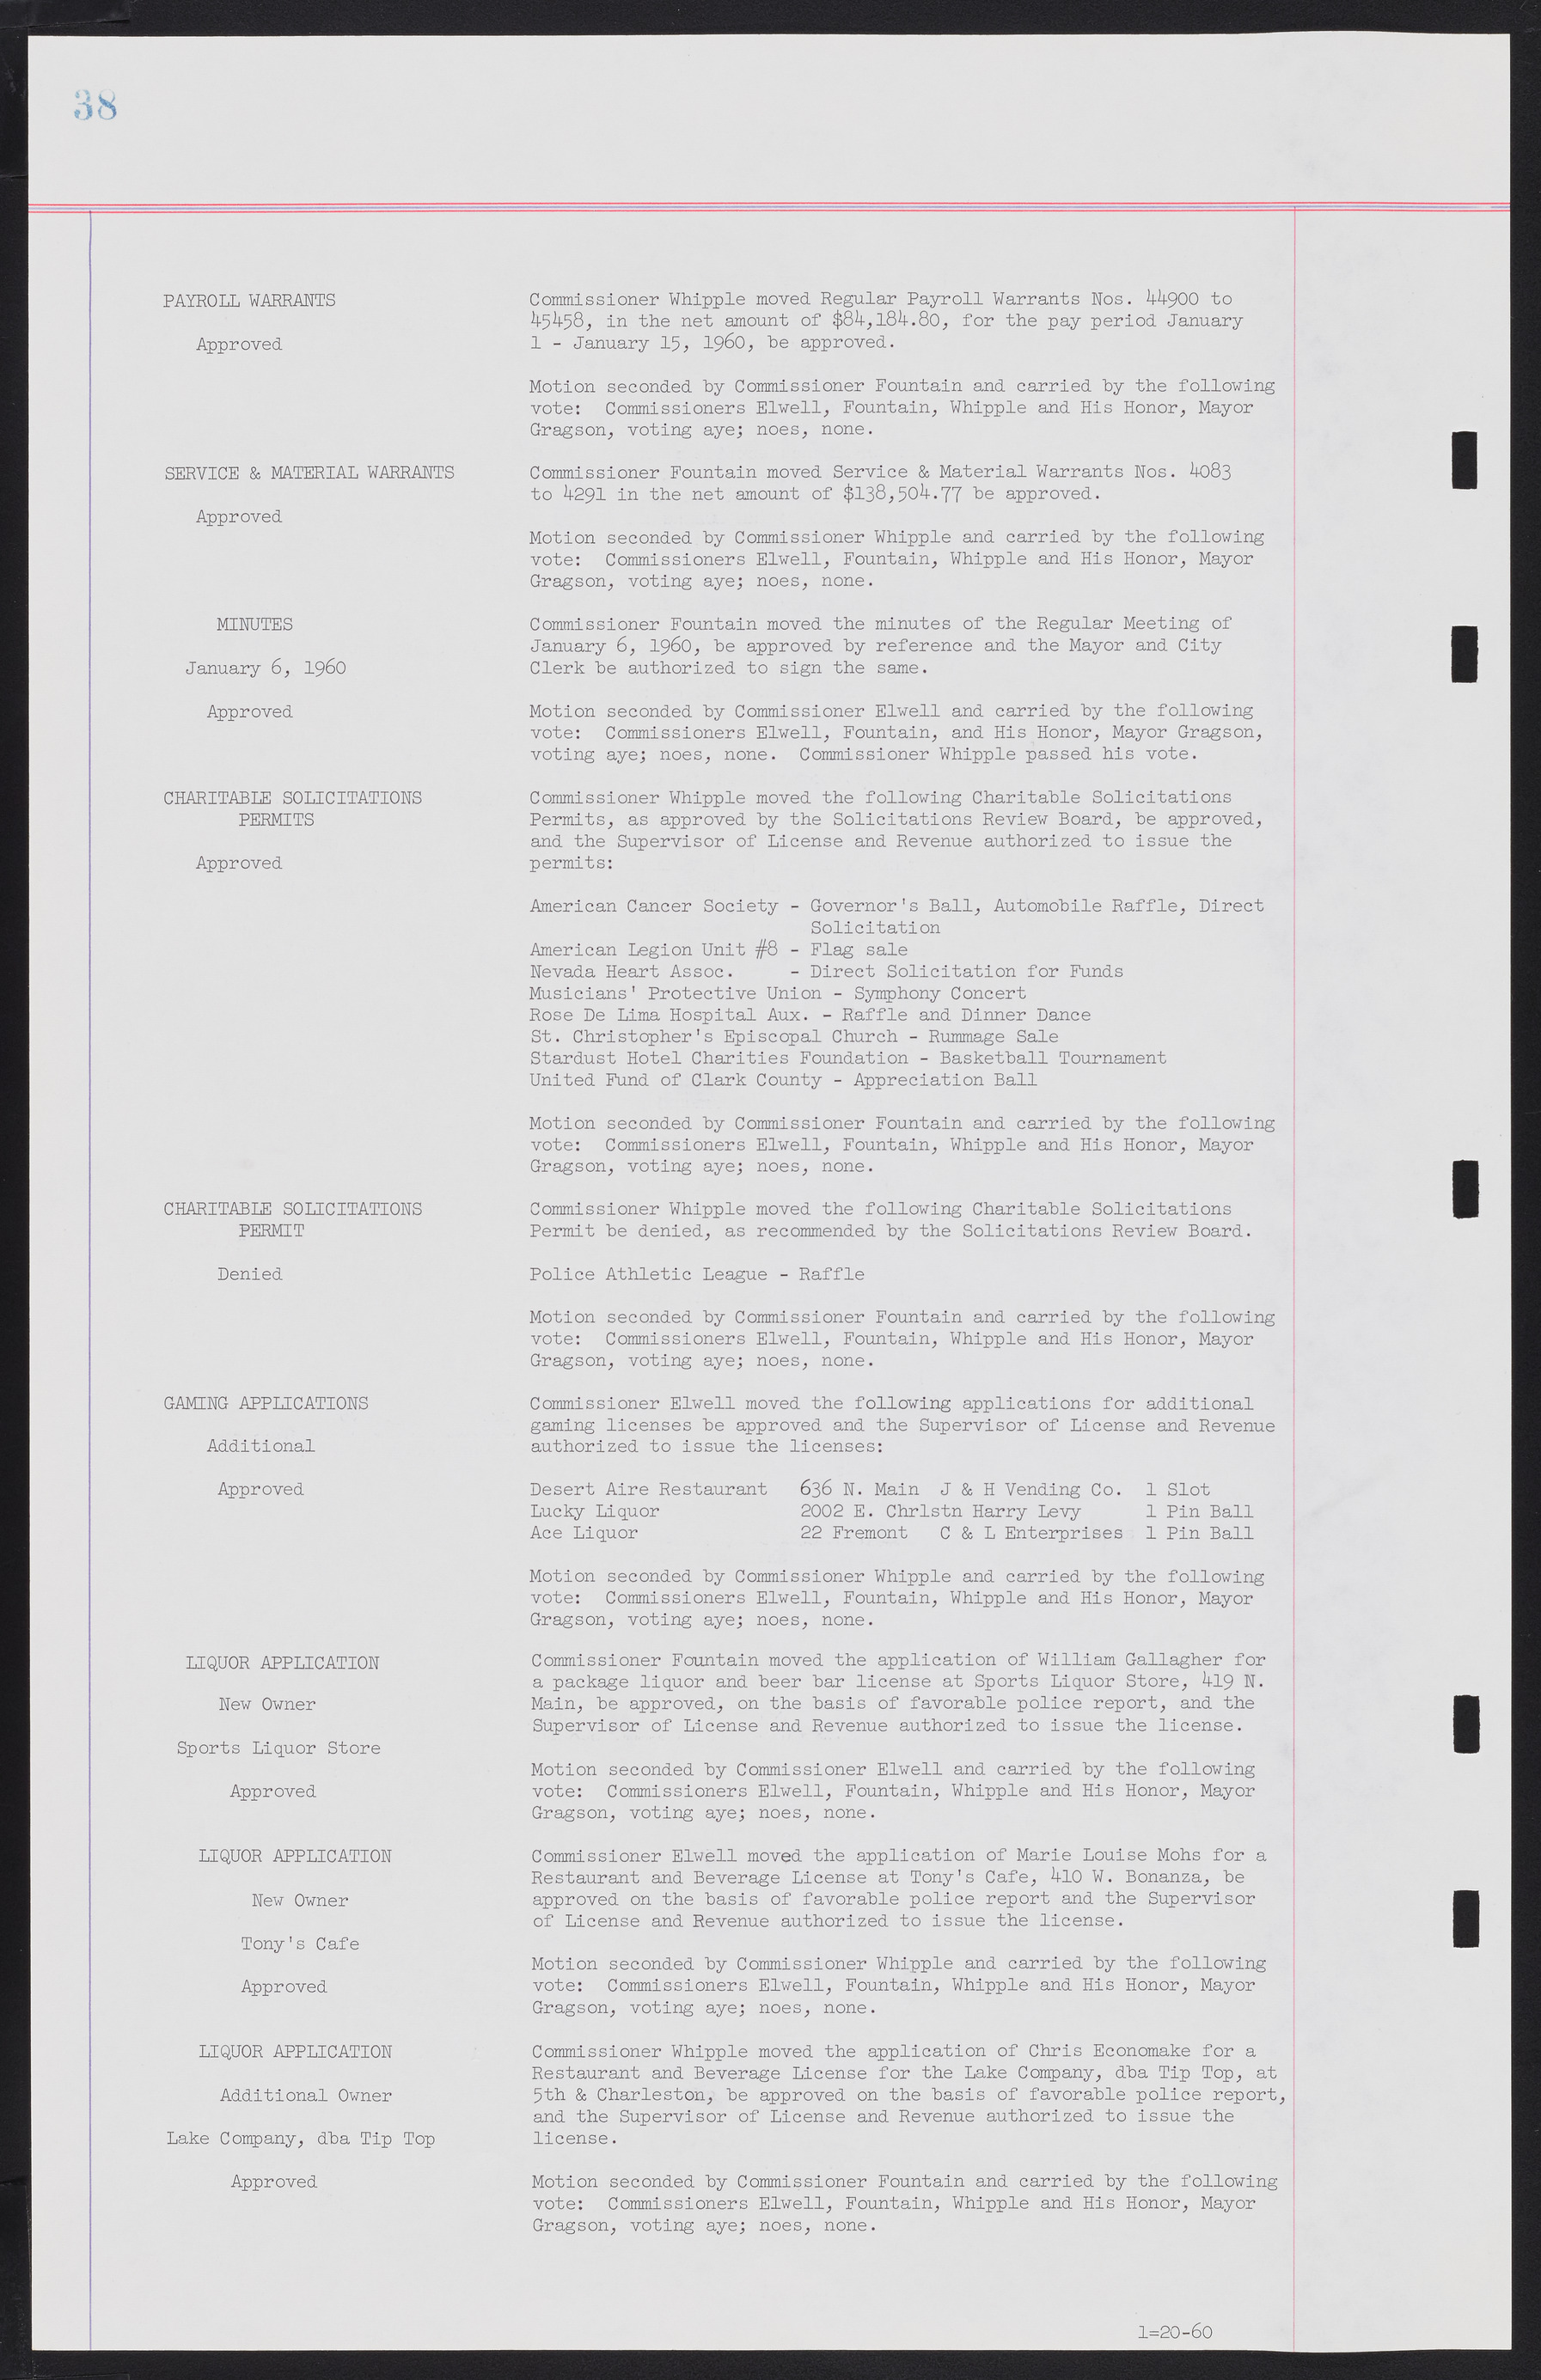 Las Vegas City Commission Minutes, December 8, 1959 to February 17, 1960, lvc000012-42